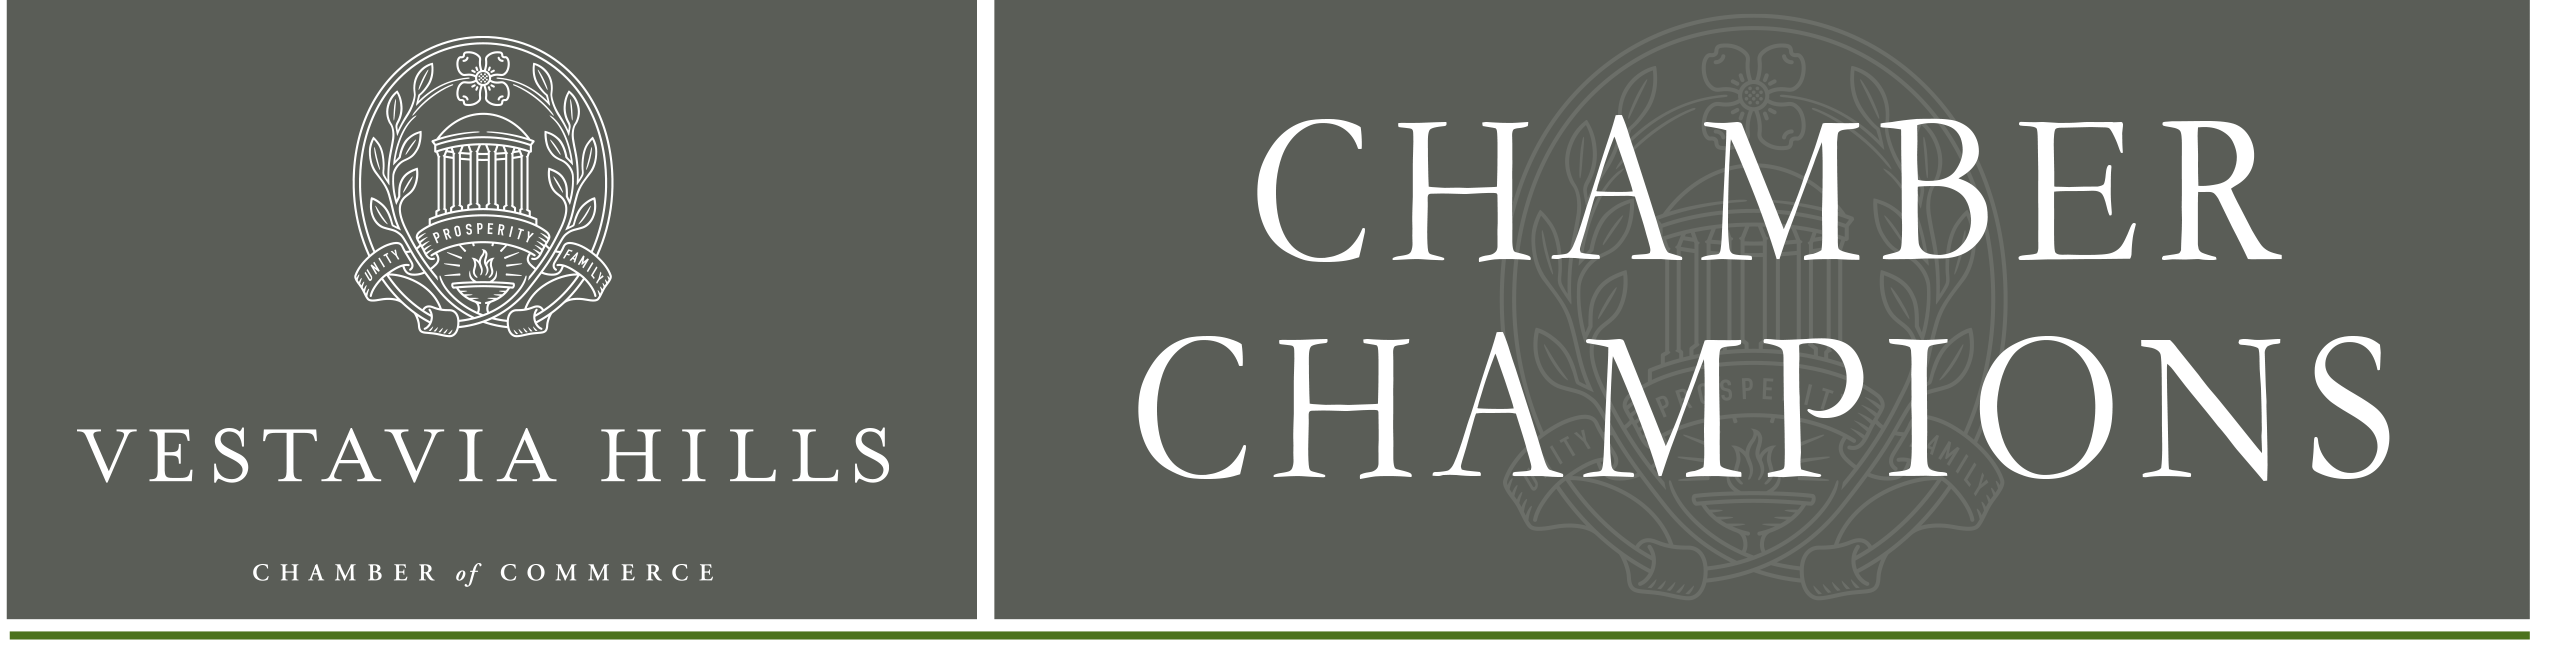 Chamber Champs 2020